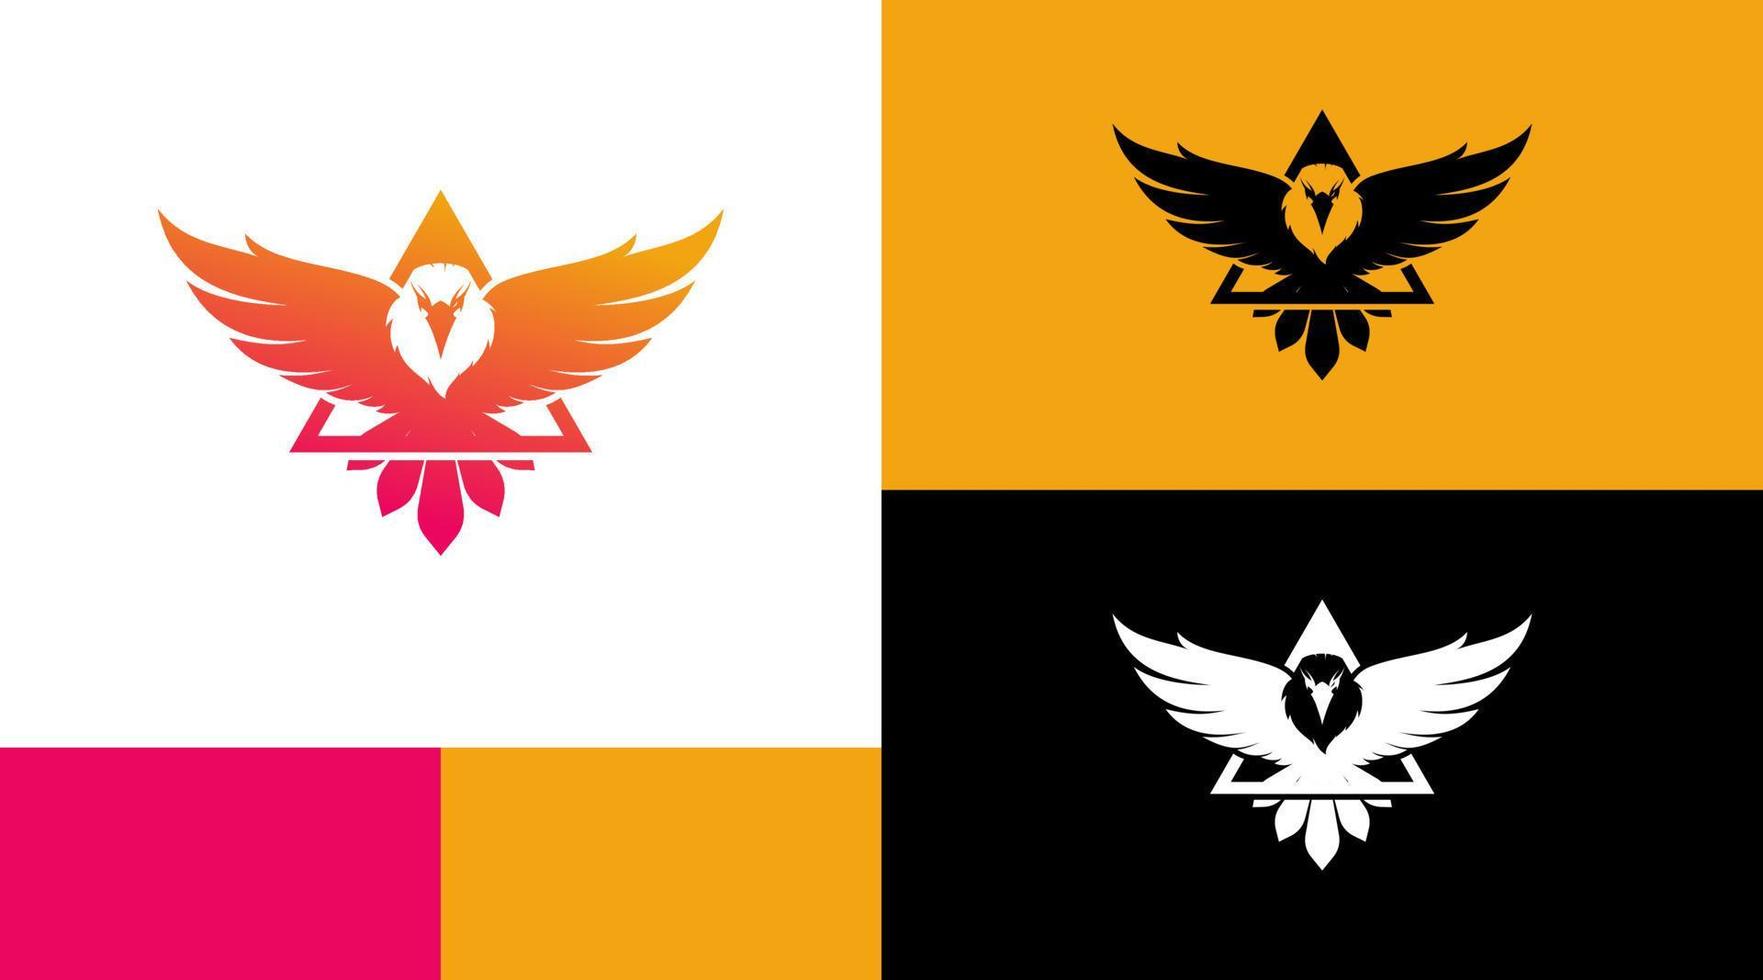 Fliegender Adler mit Dreieck-Logo-Design-Konzept vektor